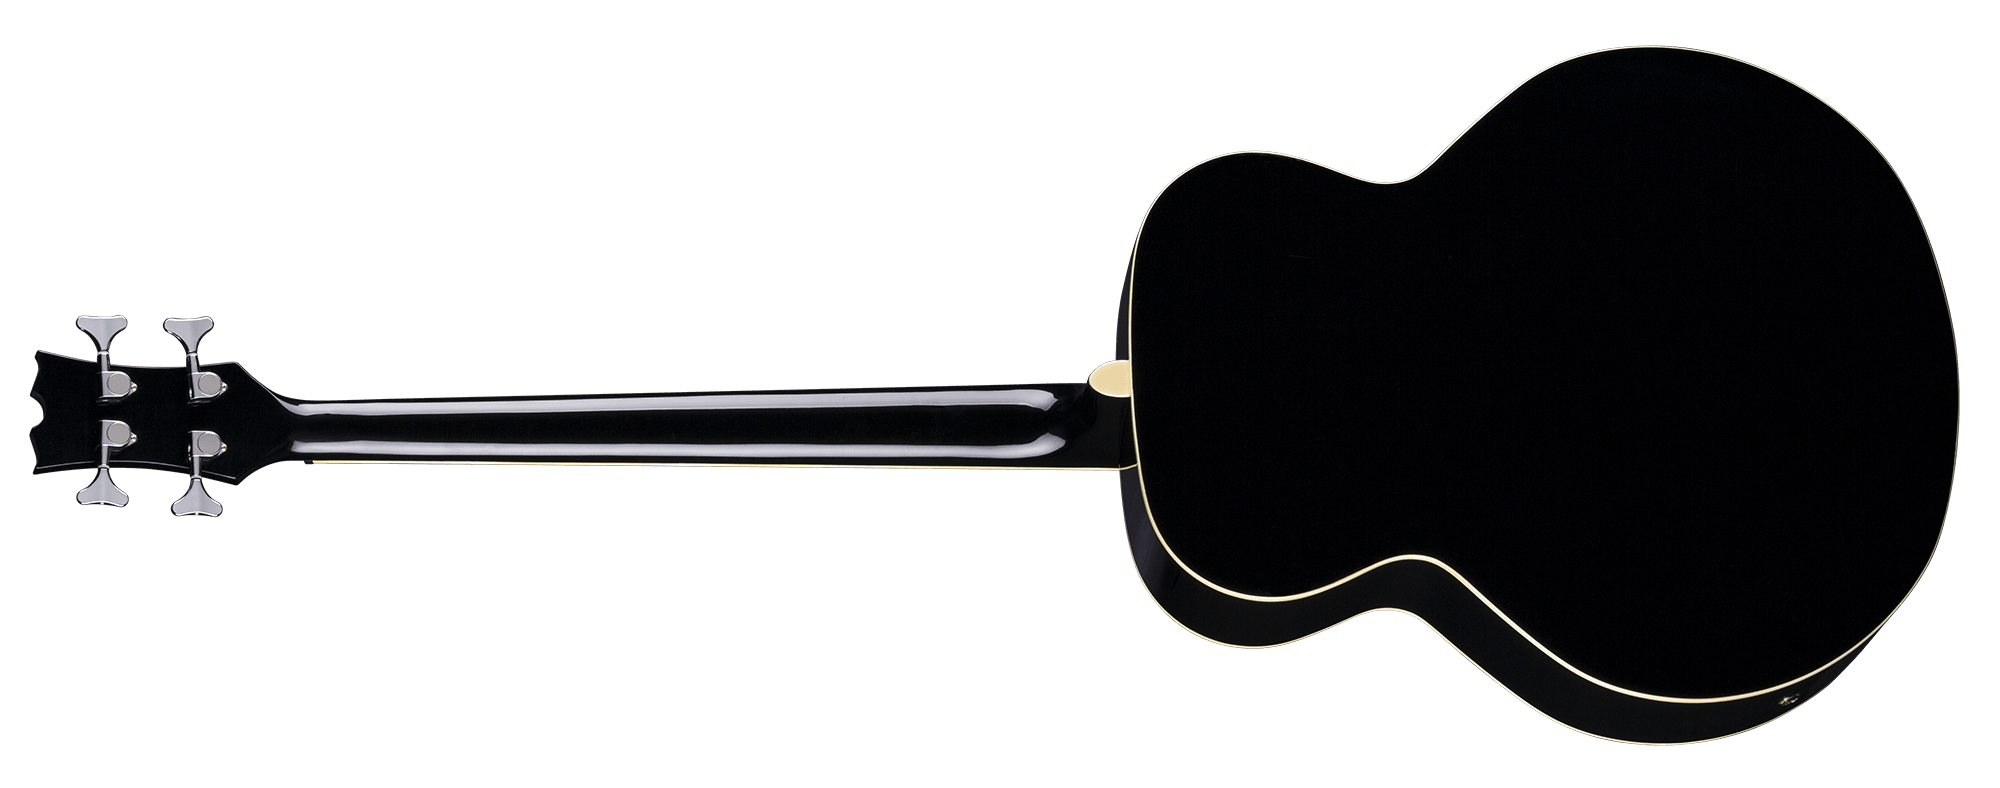 Guitar clipart clip art black. Acoustic bass free on